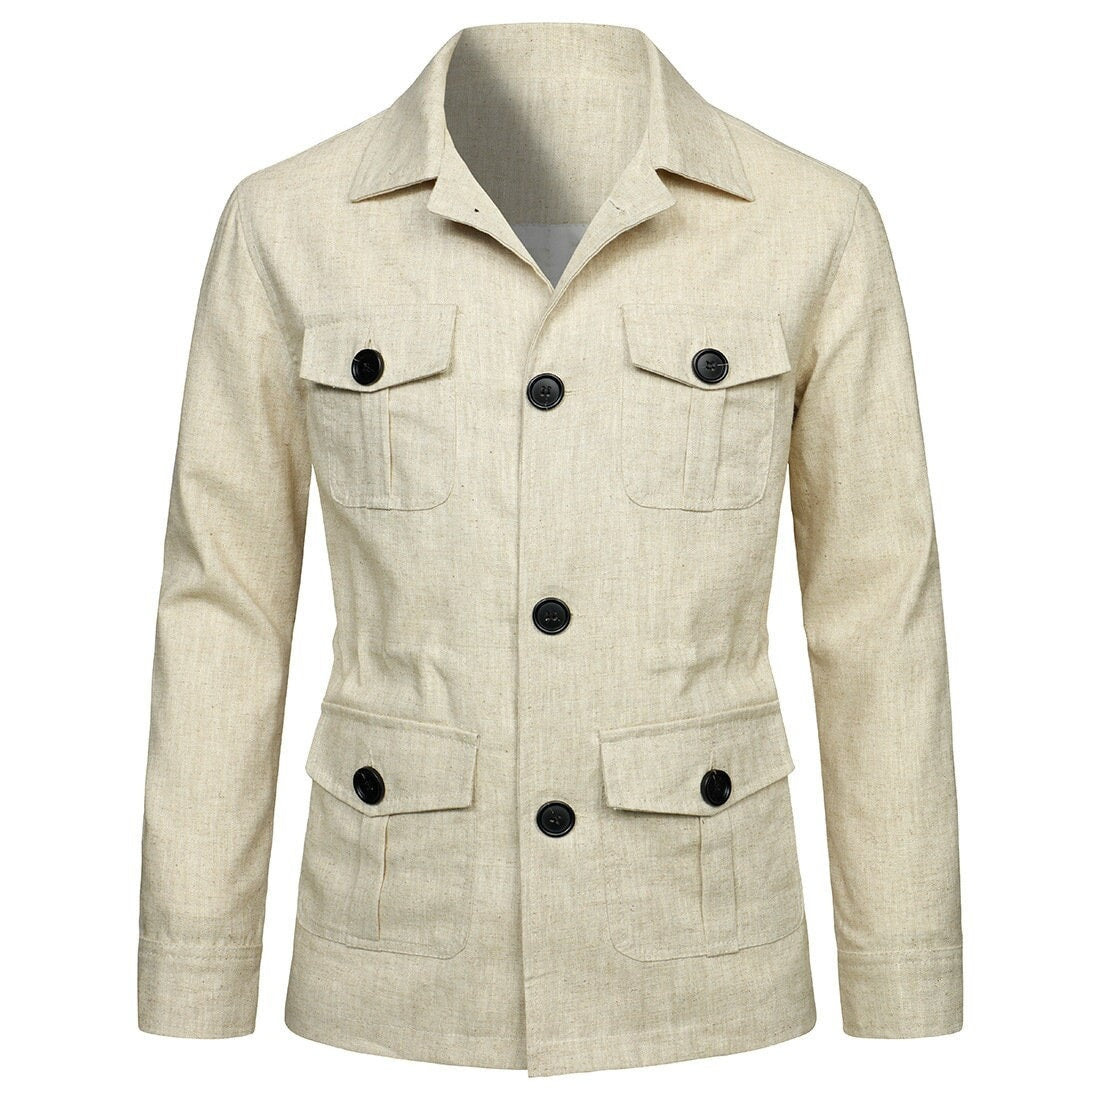 Military Safari Style Sartorial Jacket with Adjustable Waist, Cotton Linen Fabric for Comfort All Season